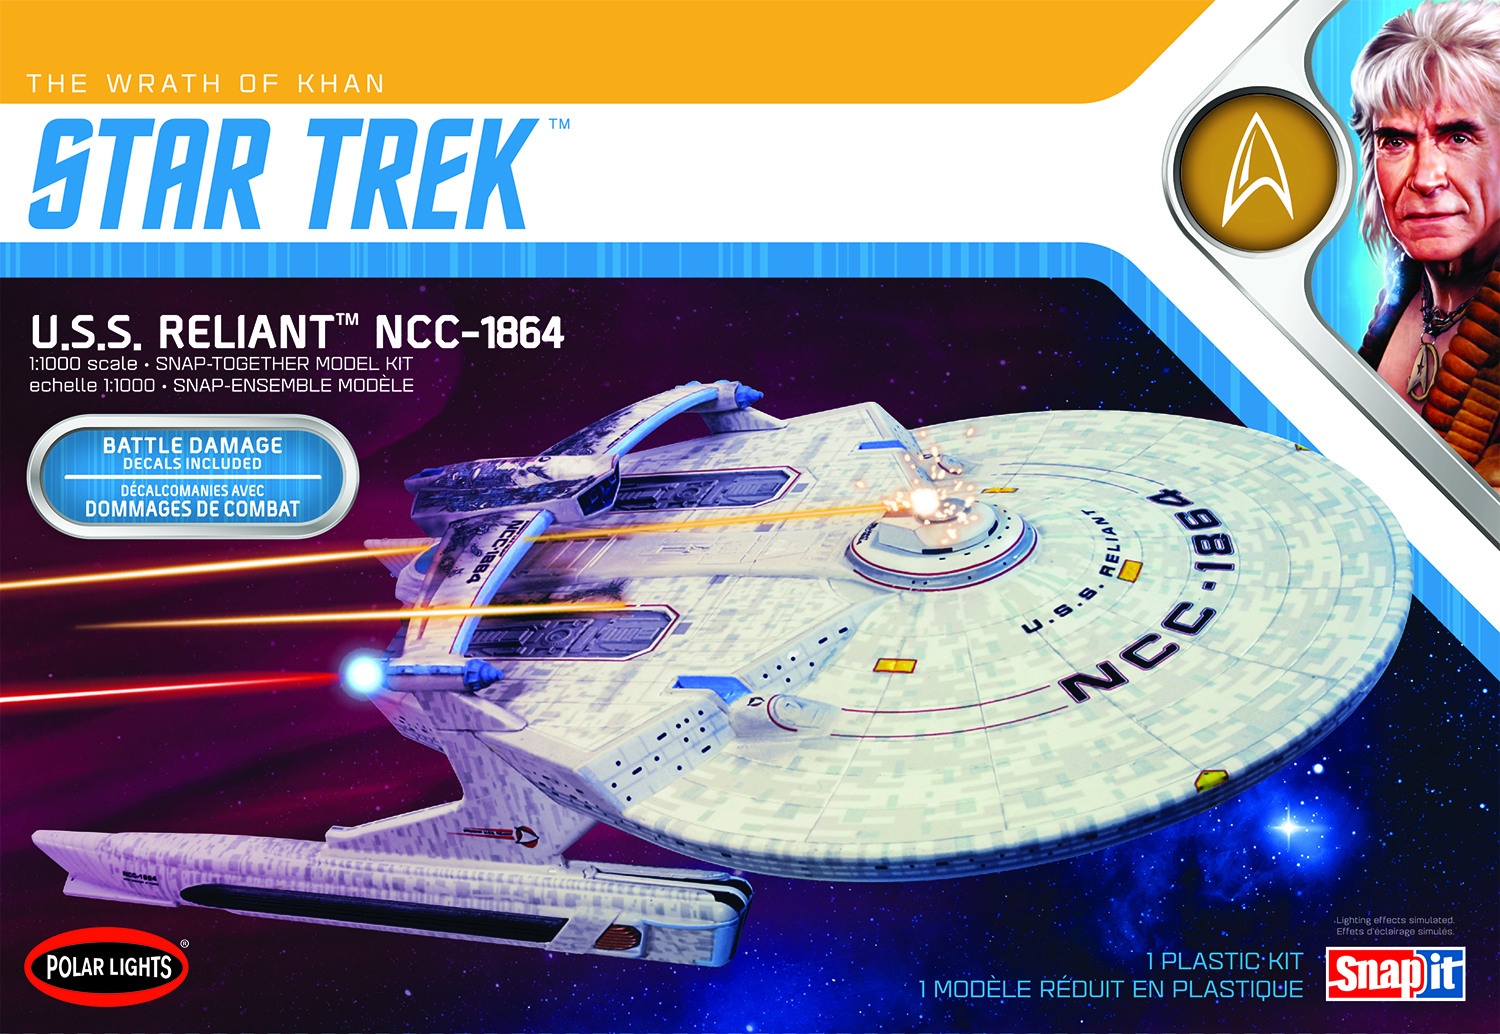 Star Trek USS Reliant "Wrath of Khan"